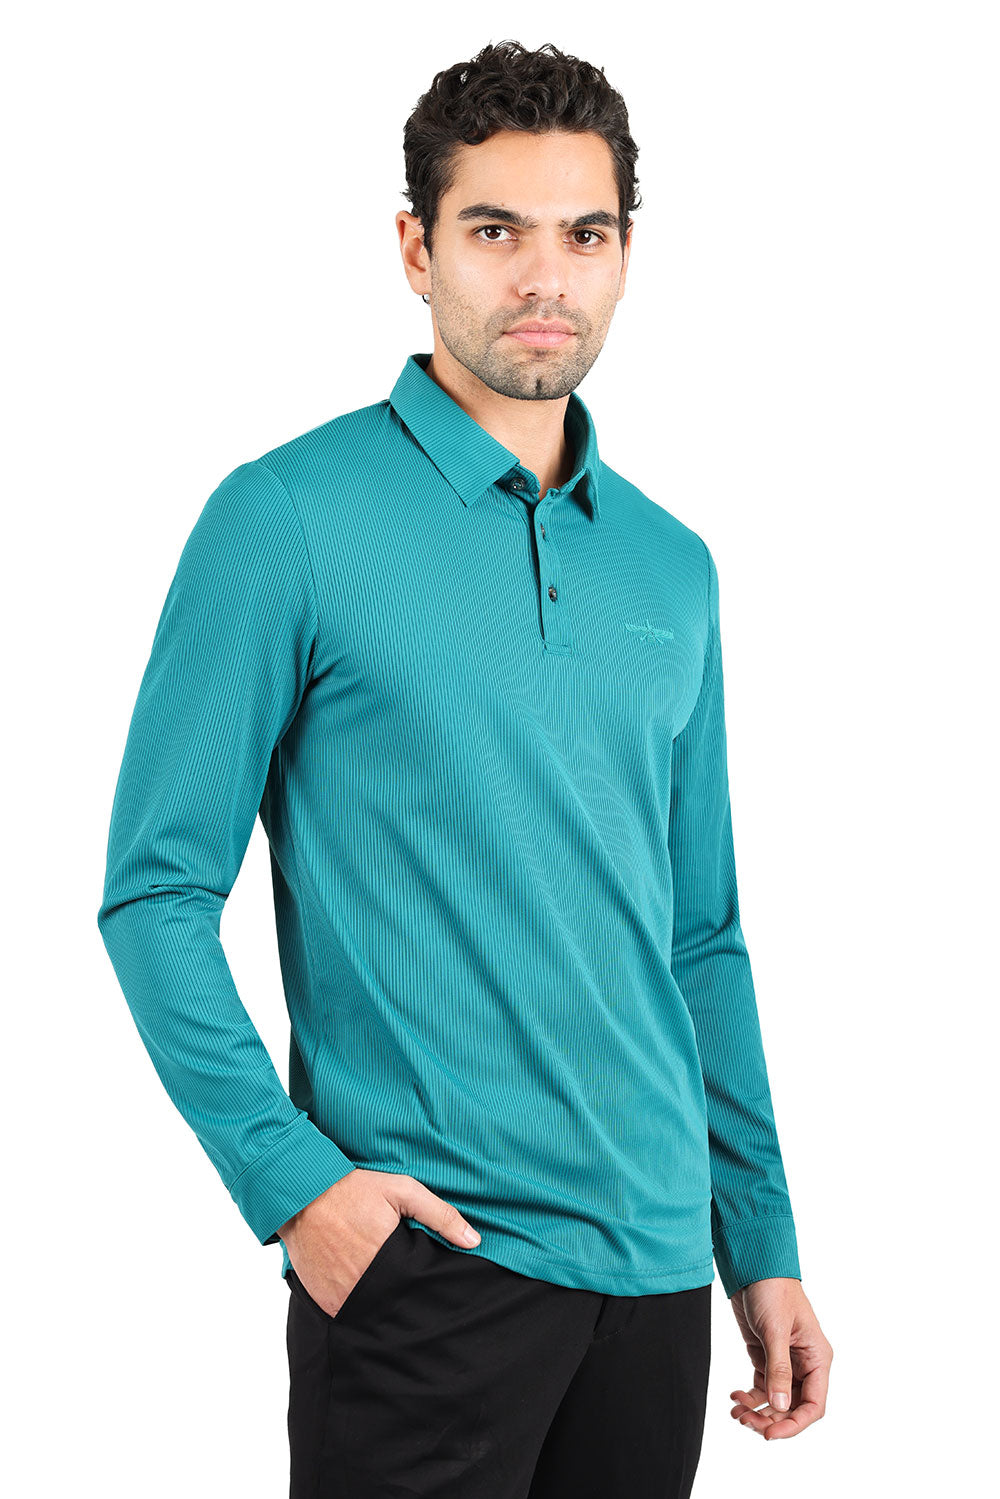 Barabas Men's Premium Solid Color Long  Sleeve Polo Shirts 2DPL30 Teal